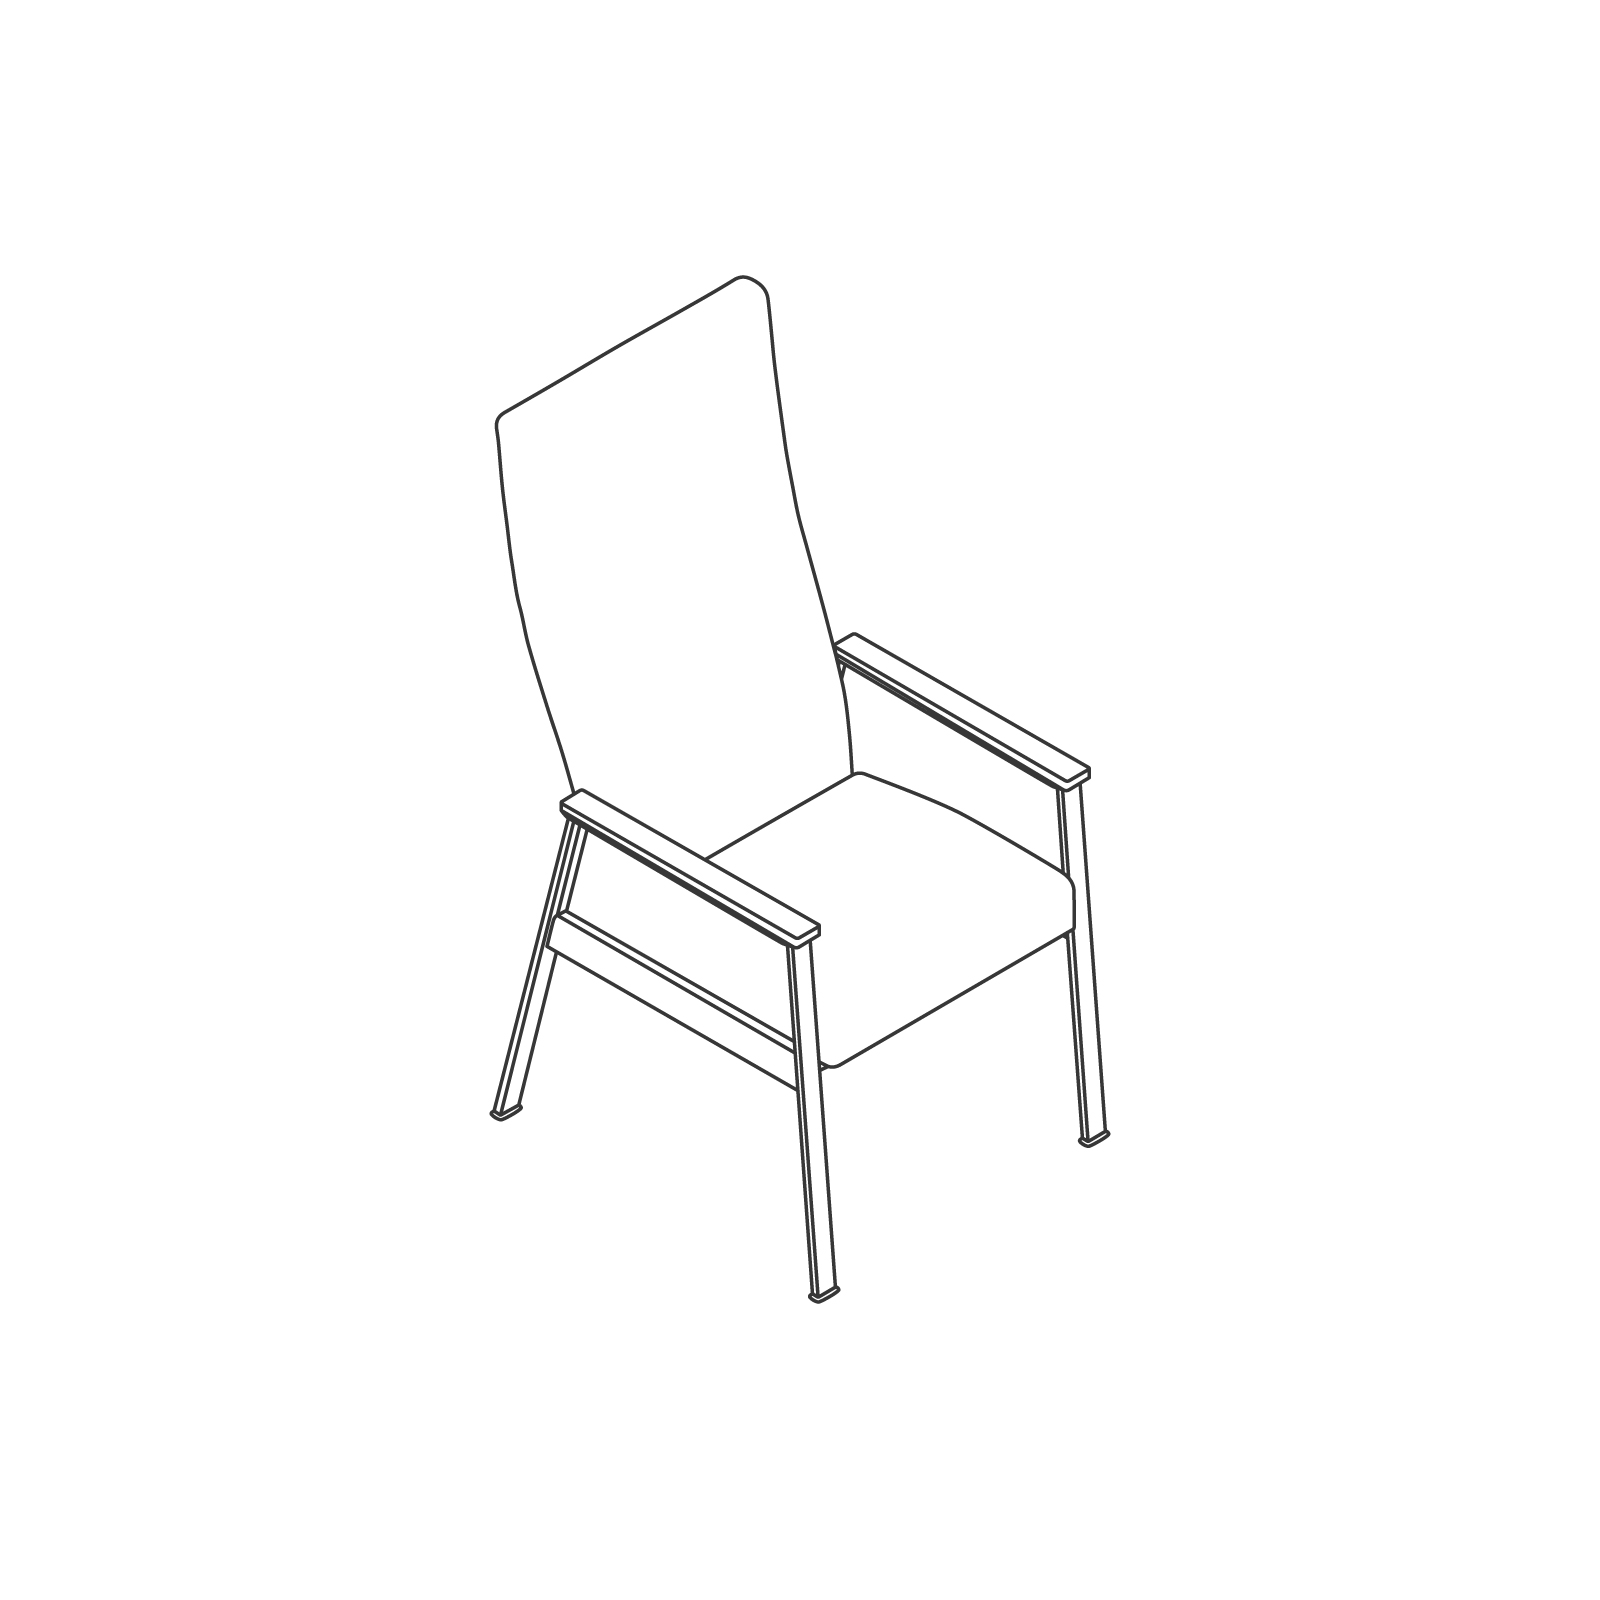 A line drawing - Nemschoff Easton Patient Chair–Closed Arm